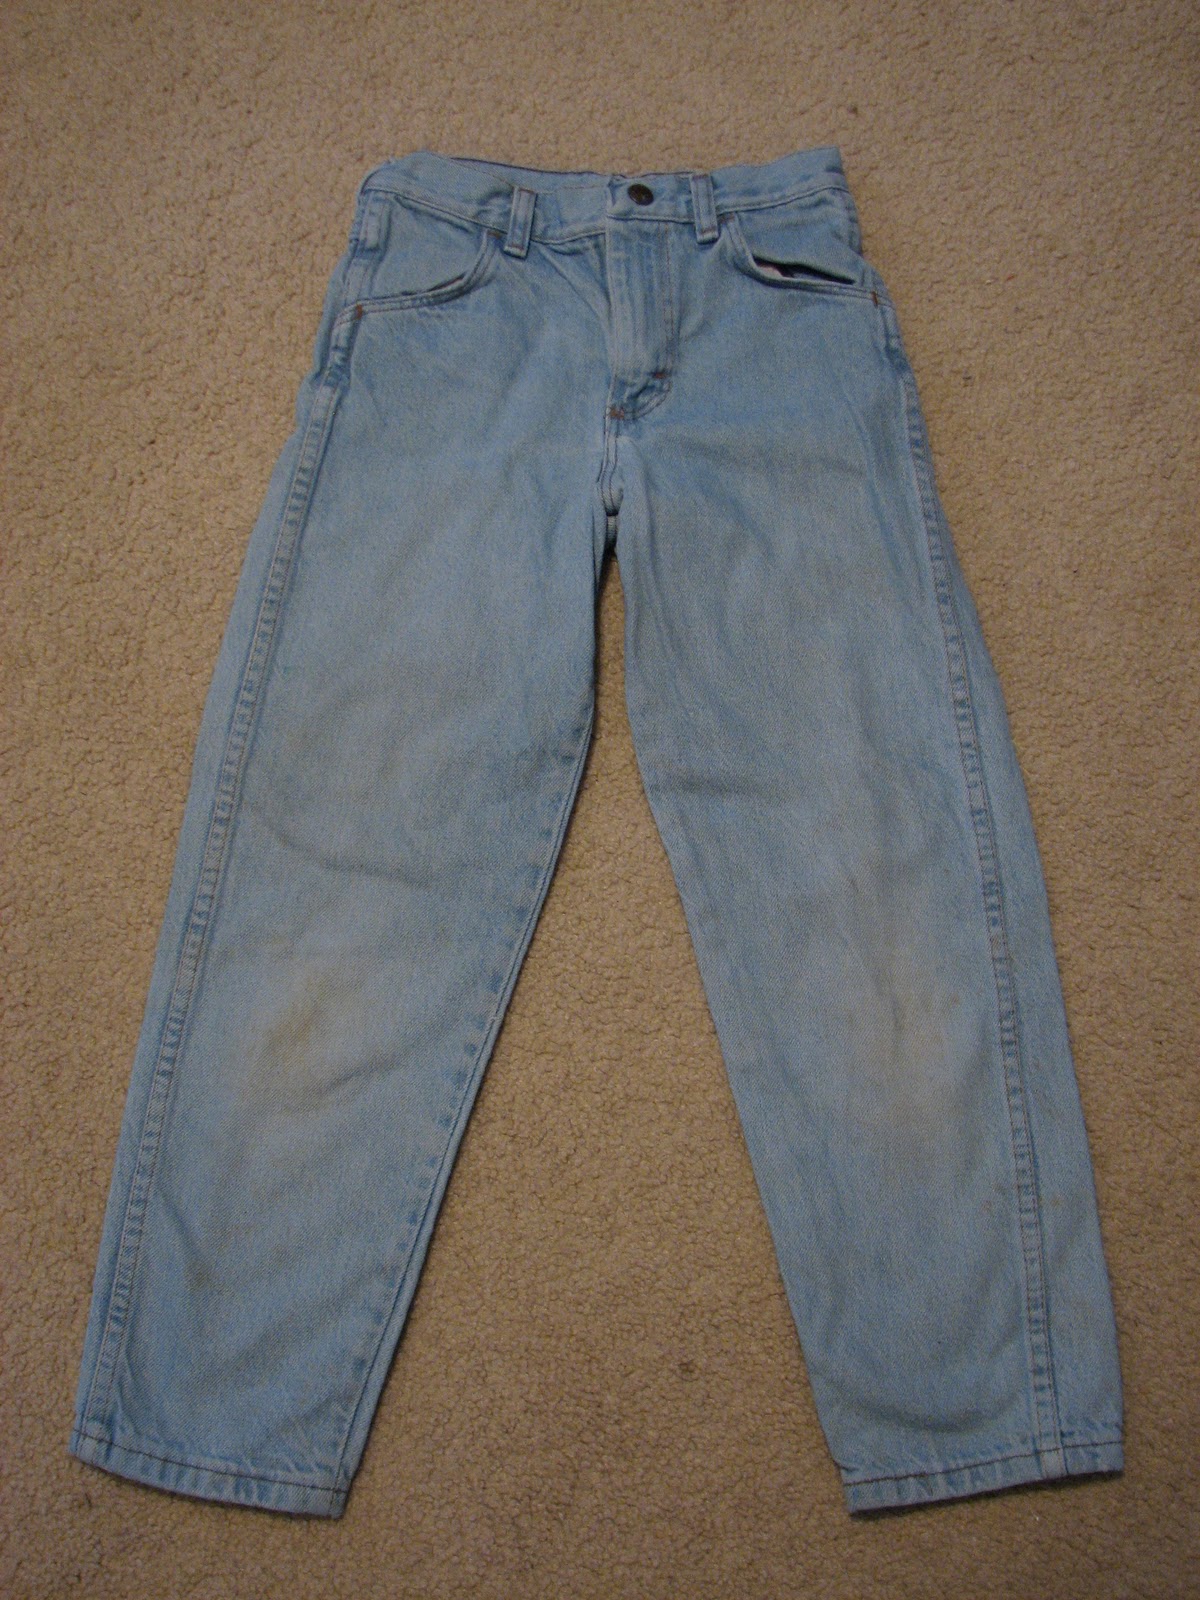 Carolina Treasures: Boys Size 10 RUSTLER Jeans